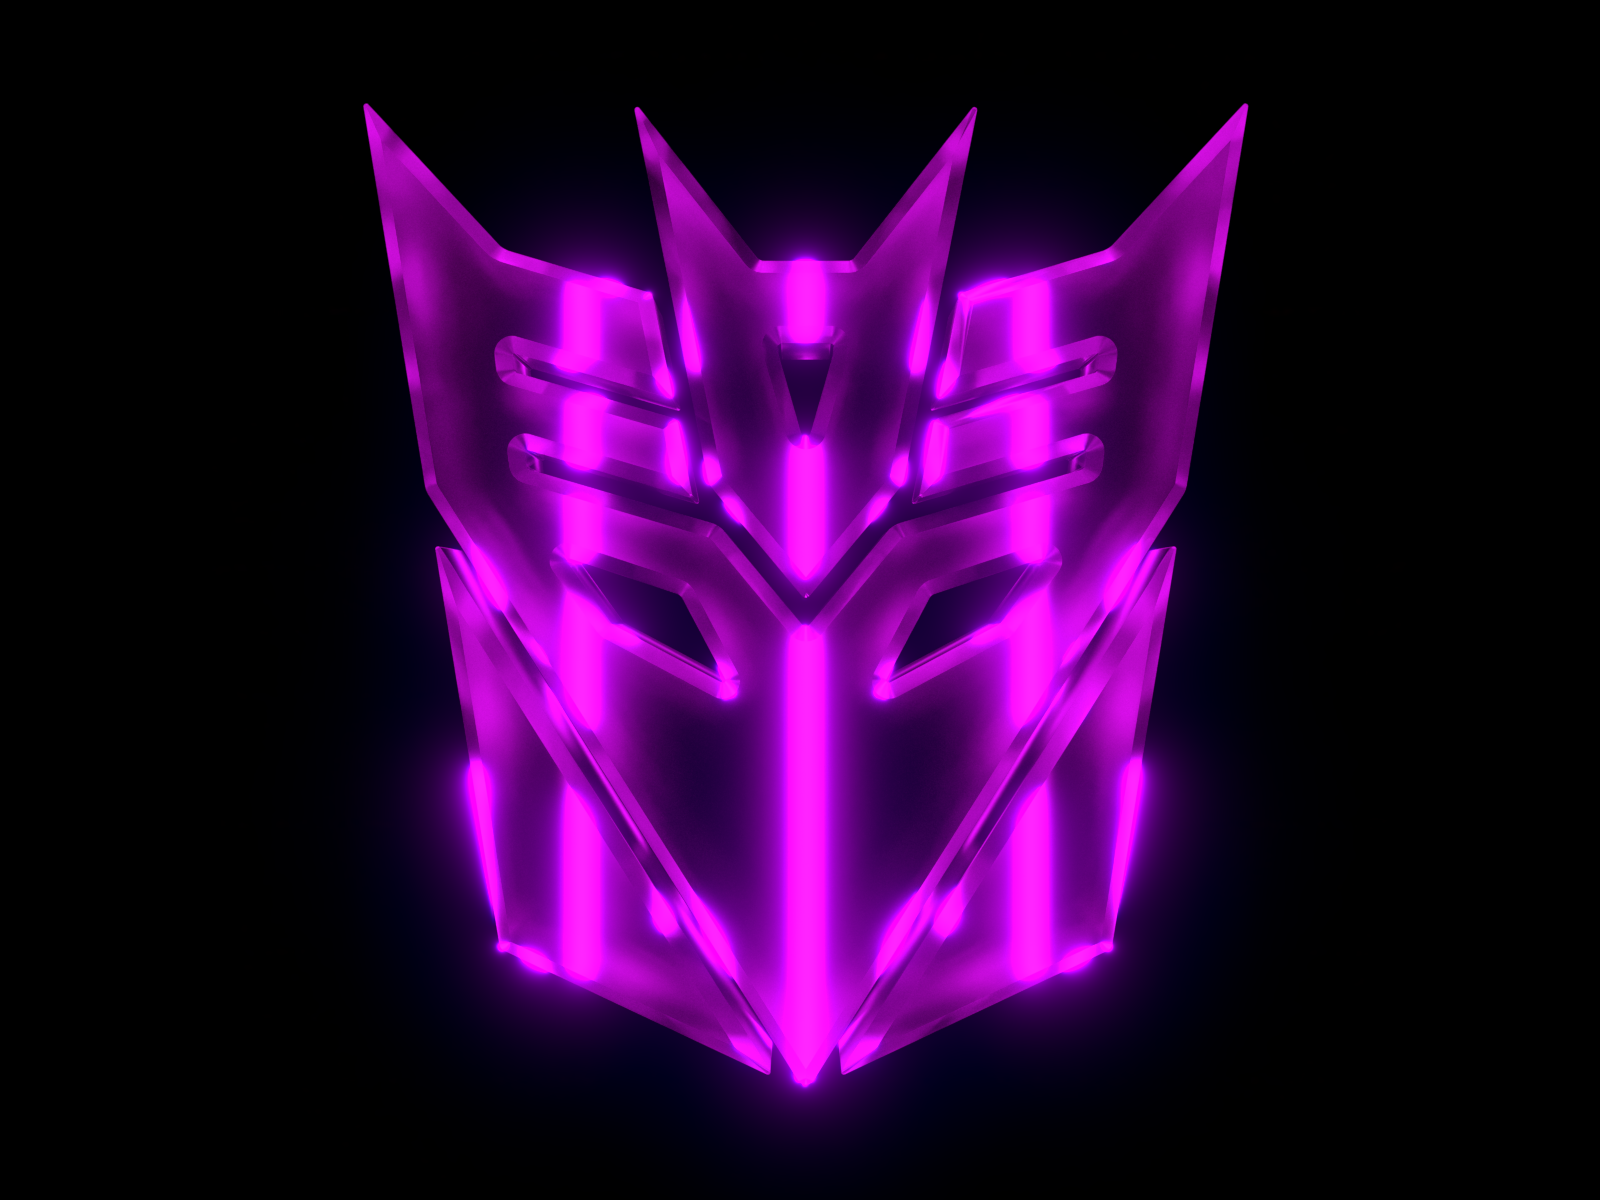 Decepticon symbol  Decepticon symbol Decepticon logo Transformers  decepticons